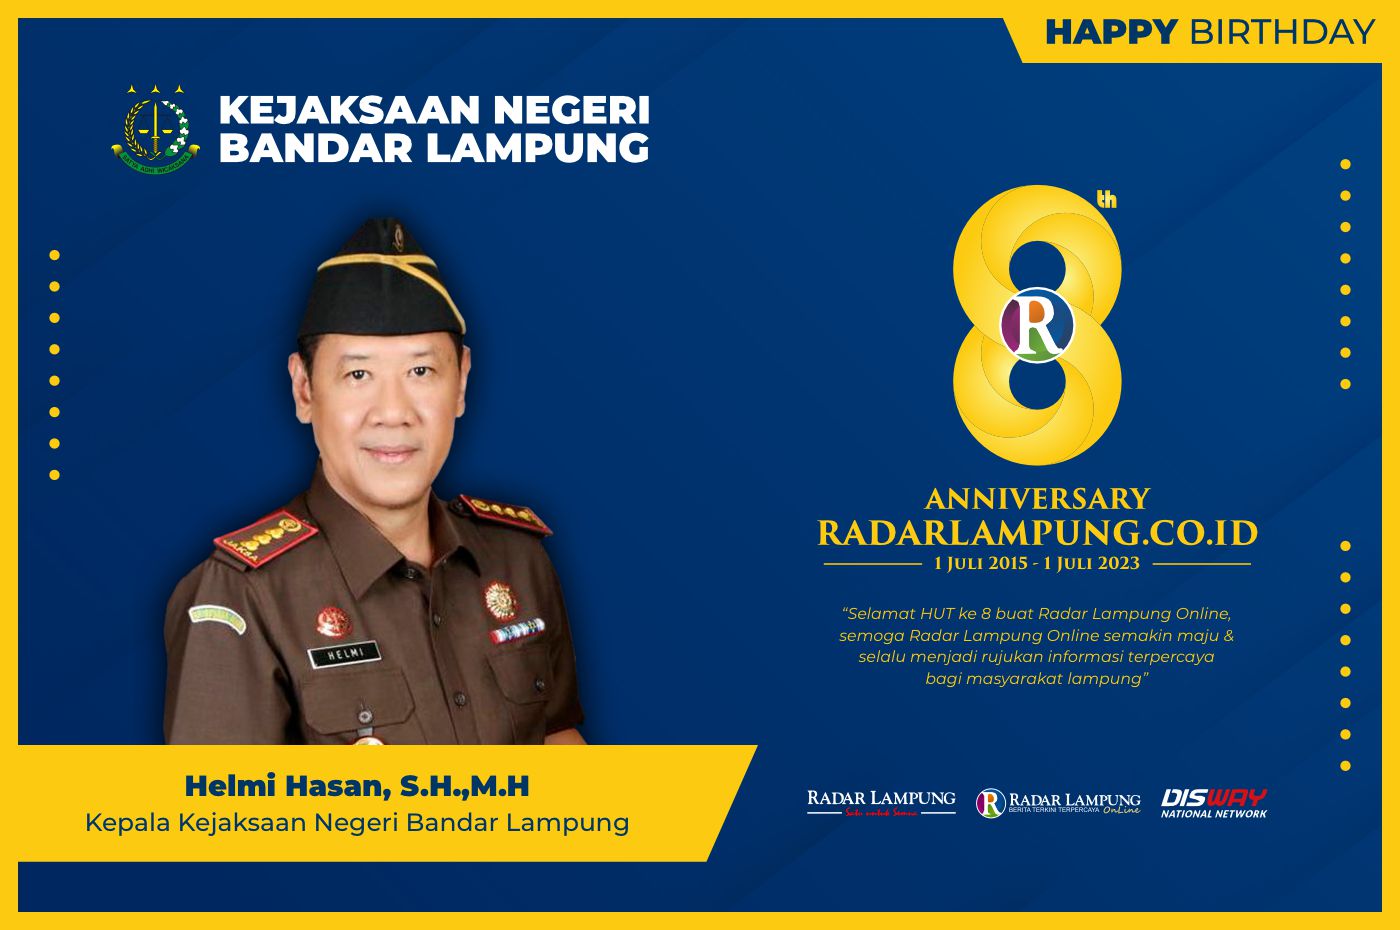 Kejaksaan Negeri Bandar Lampung: Selamat Hari Jadi ke-8 Radar Lampung Online